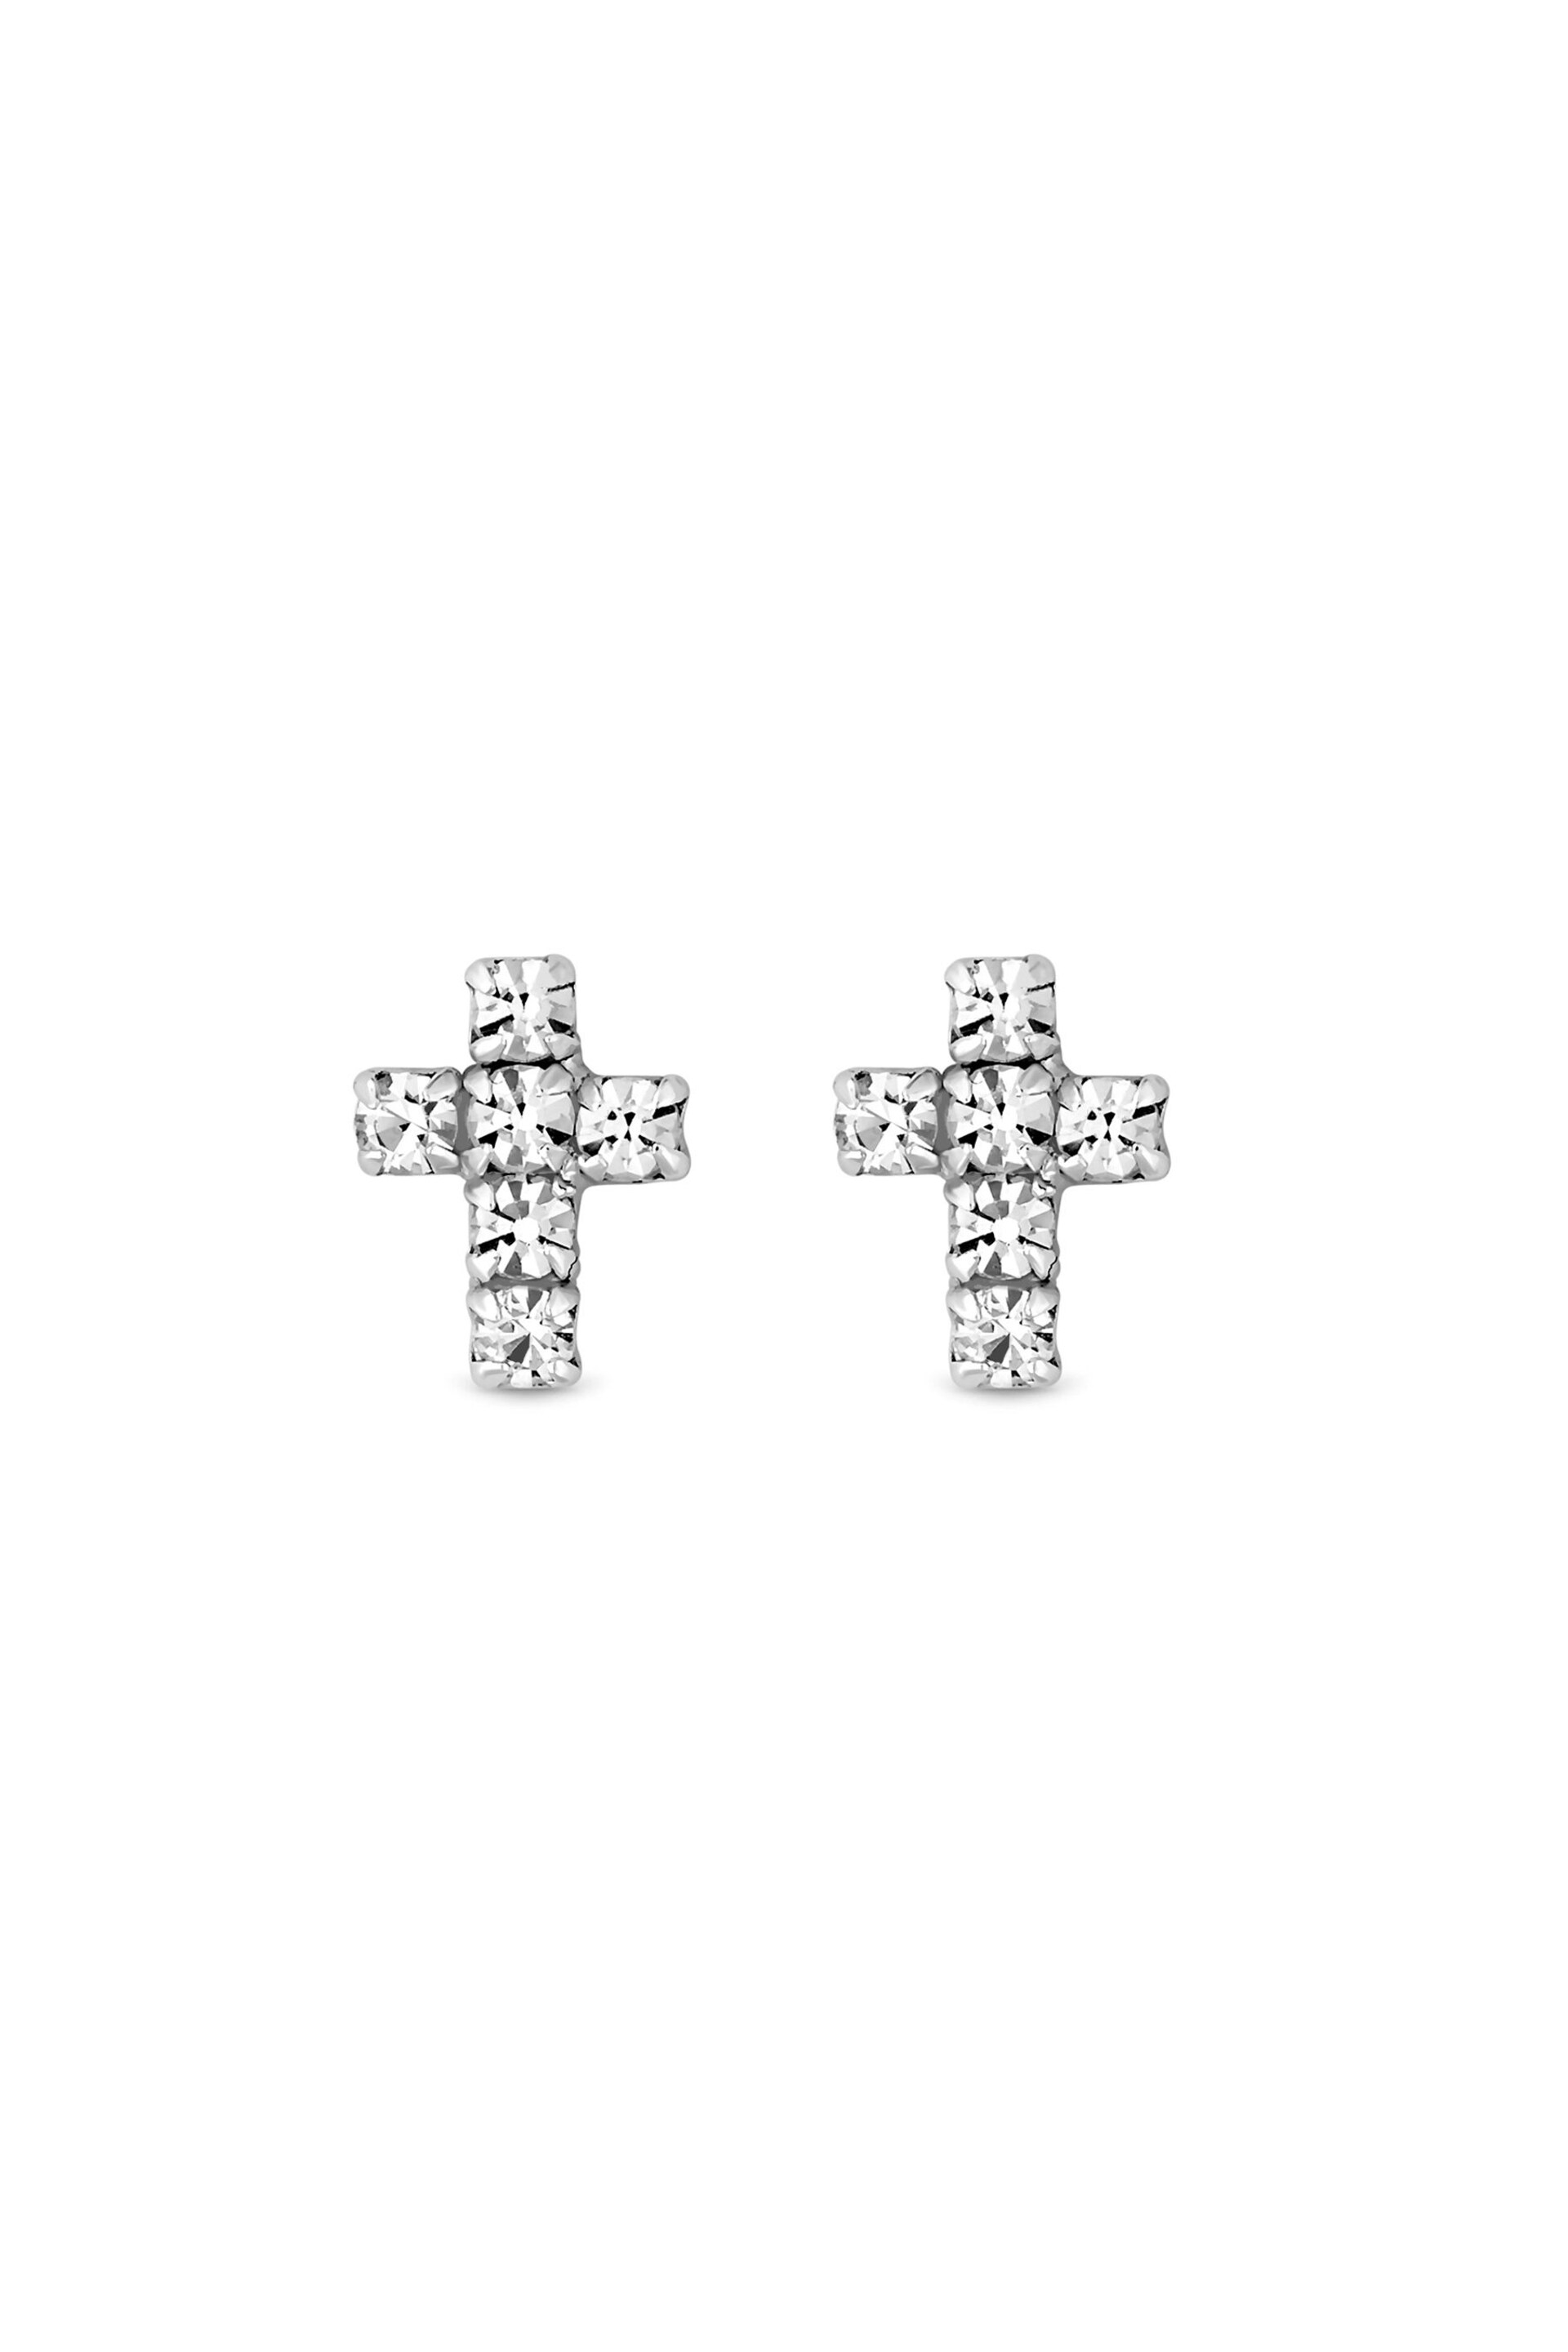 Simply Silver Silver Tone Cubic Zirconia Cross Stud Earrings - Image 1 of 1